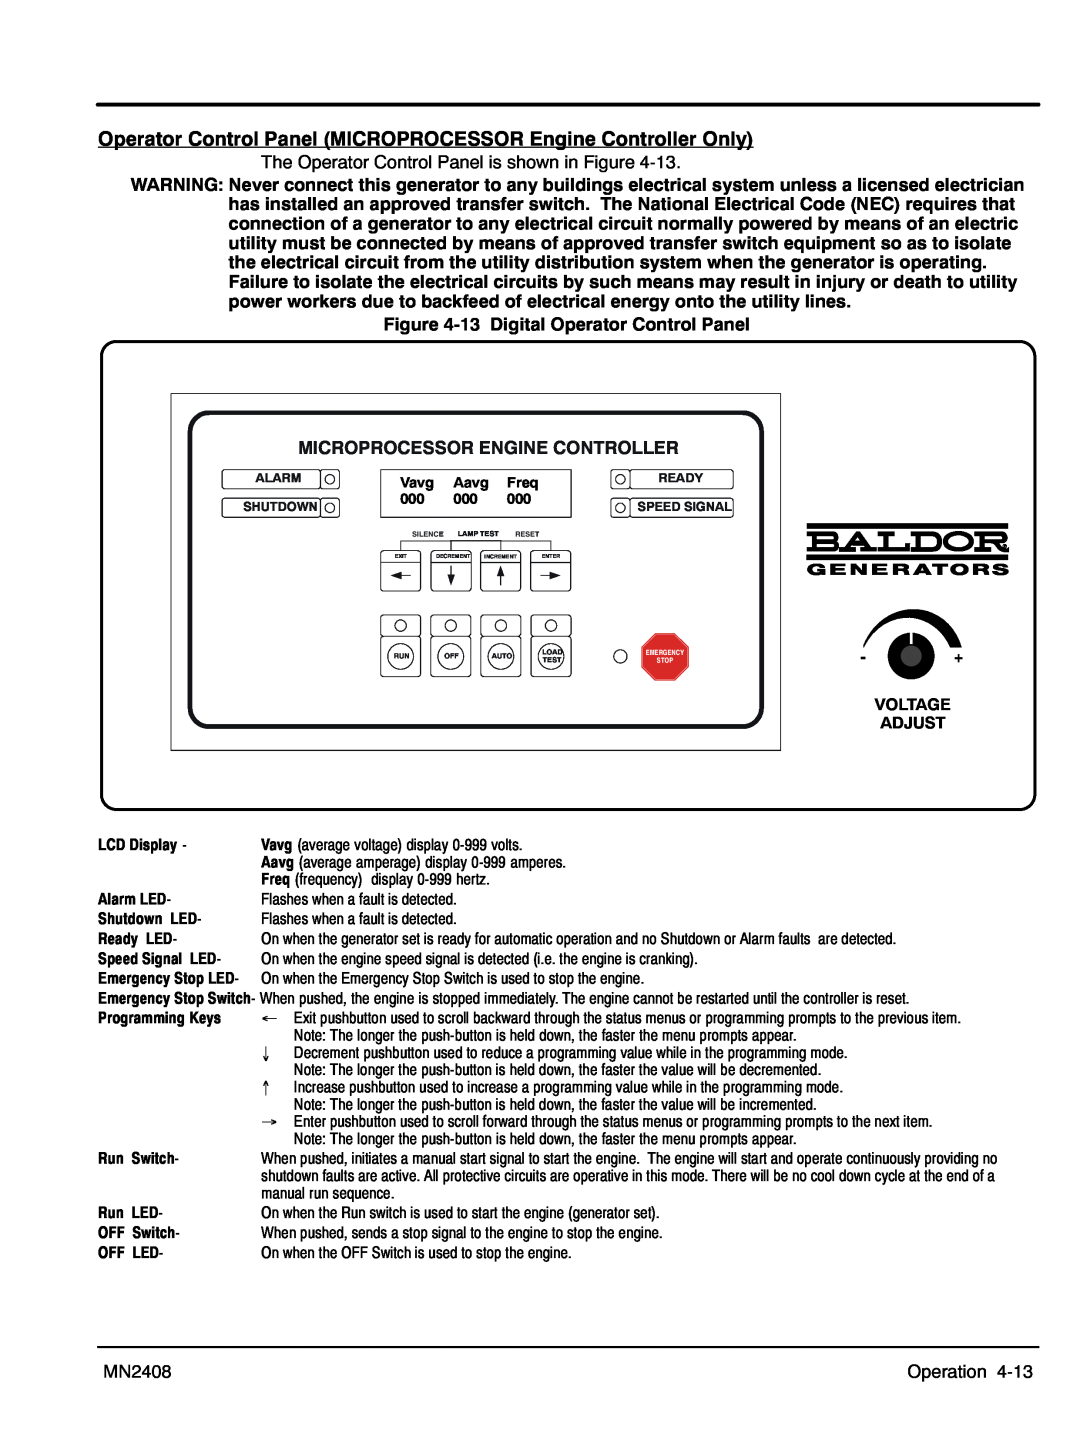 Baldor GLC25 Operator Control Panel MICROPROCESSOR Engine Controller Only, ‐13 Digital Operator Control Panel, Voltage 